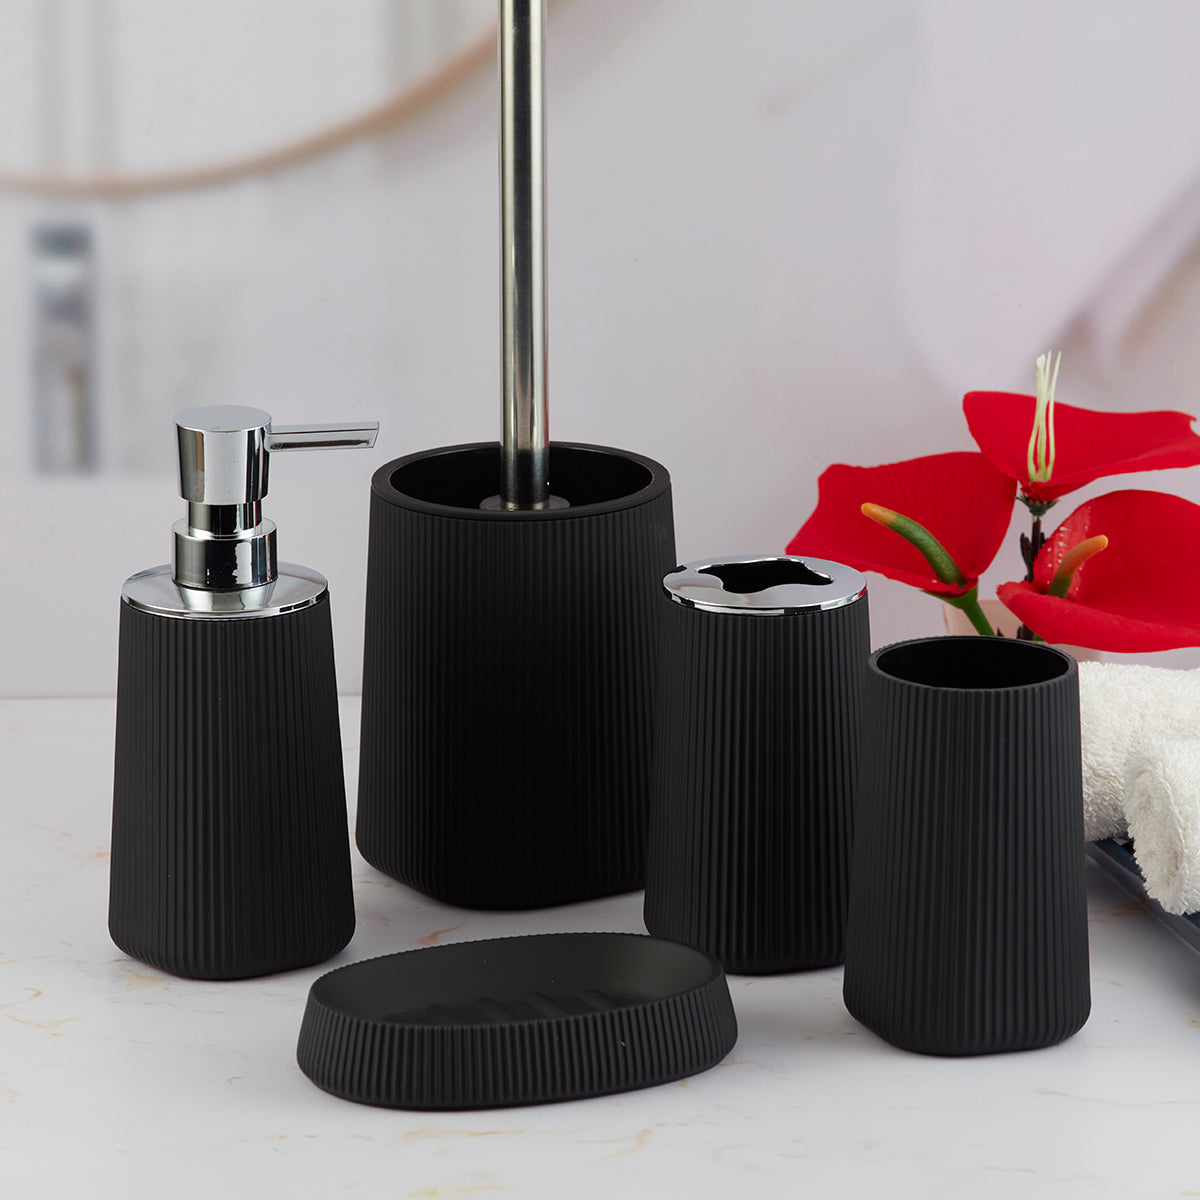 Acrylic Bathroom Accessories Set of 5 Bath Set with Soap Dispenser (10034)